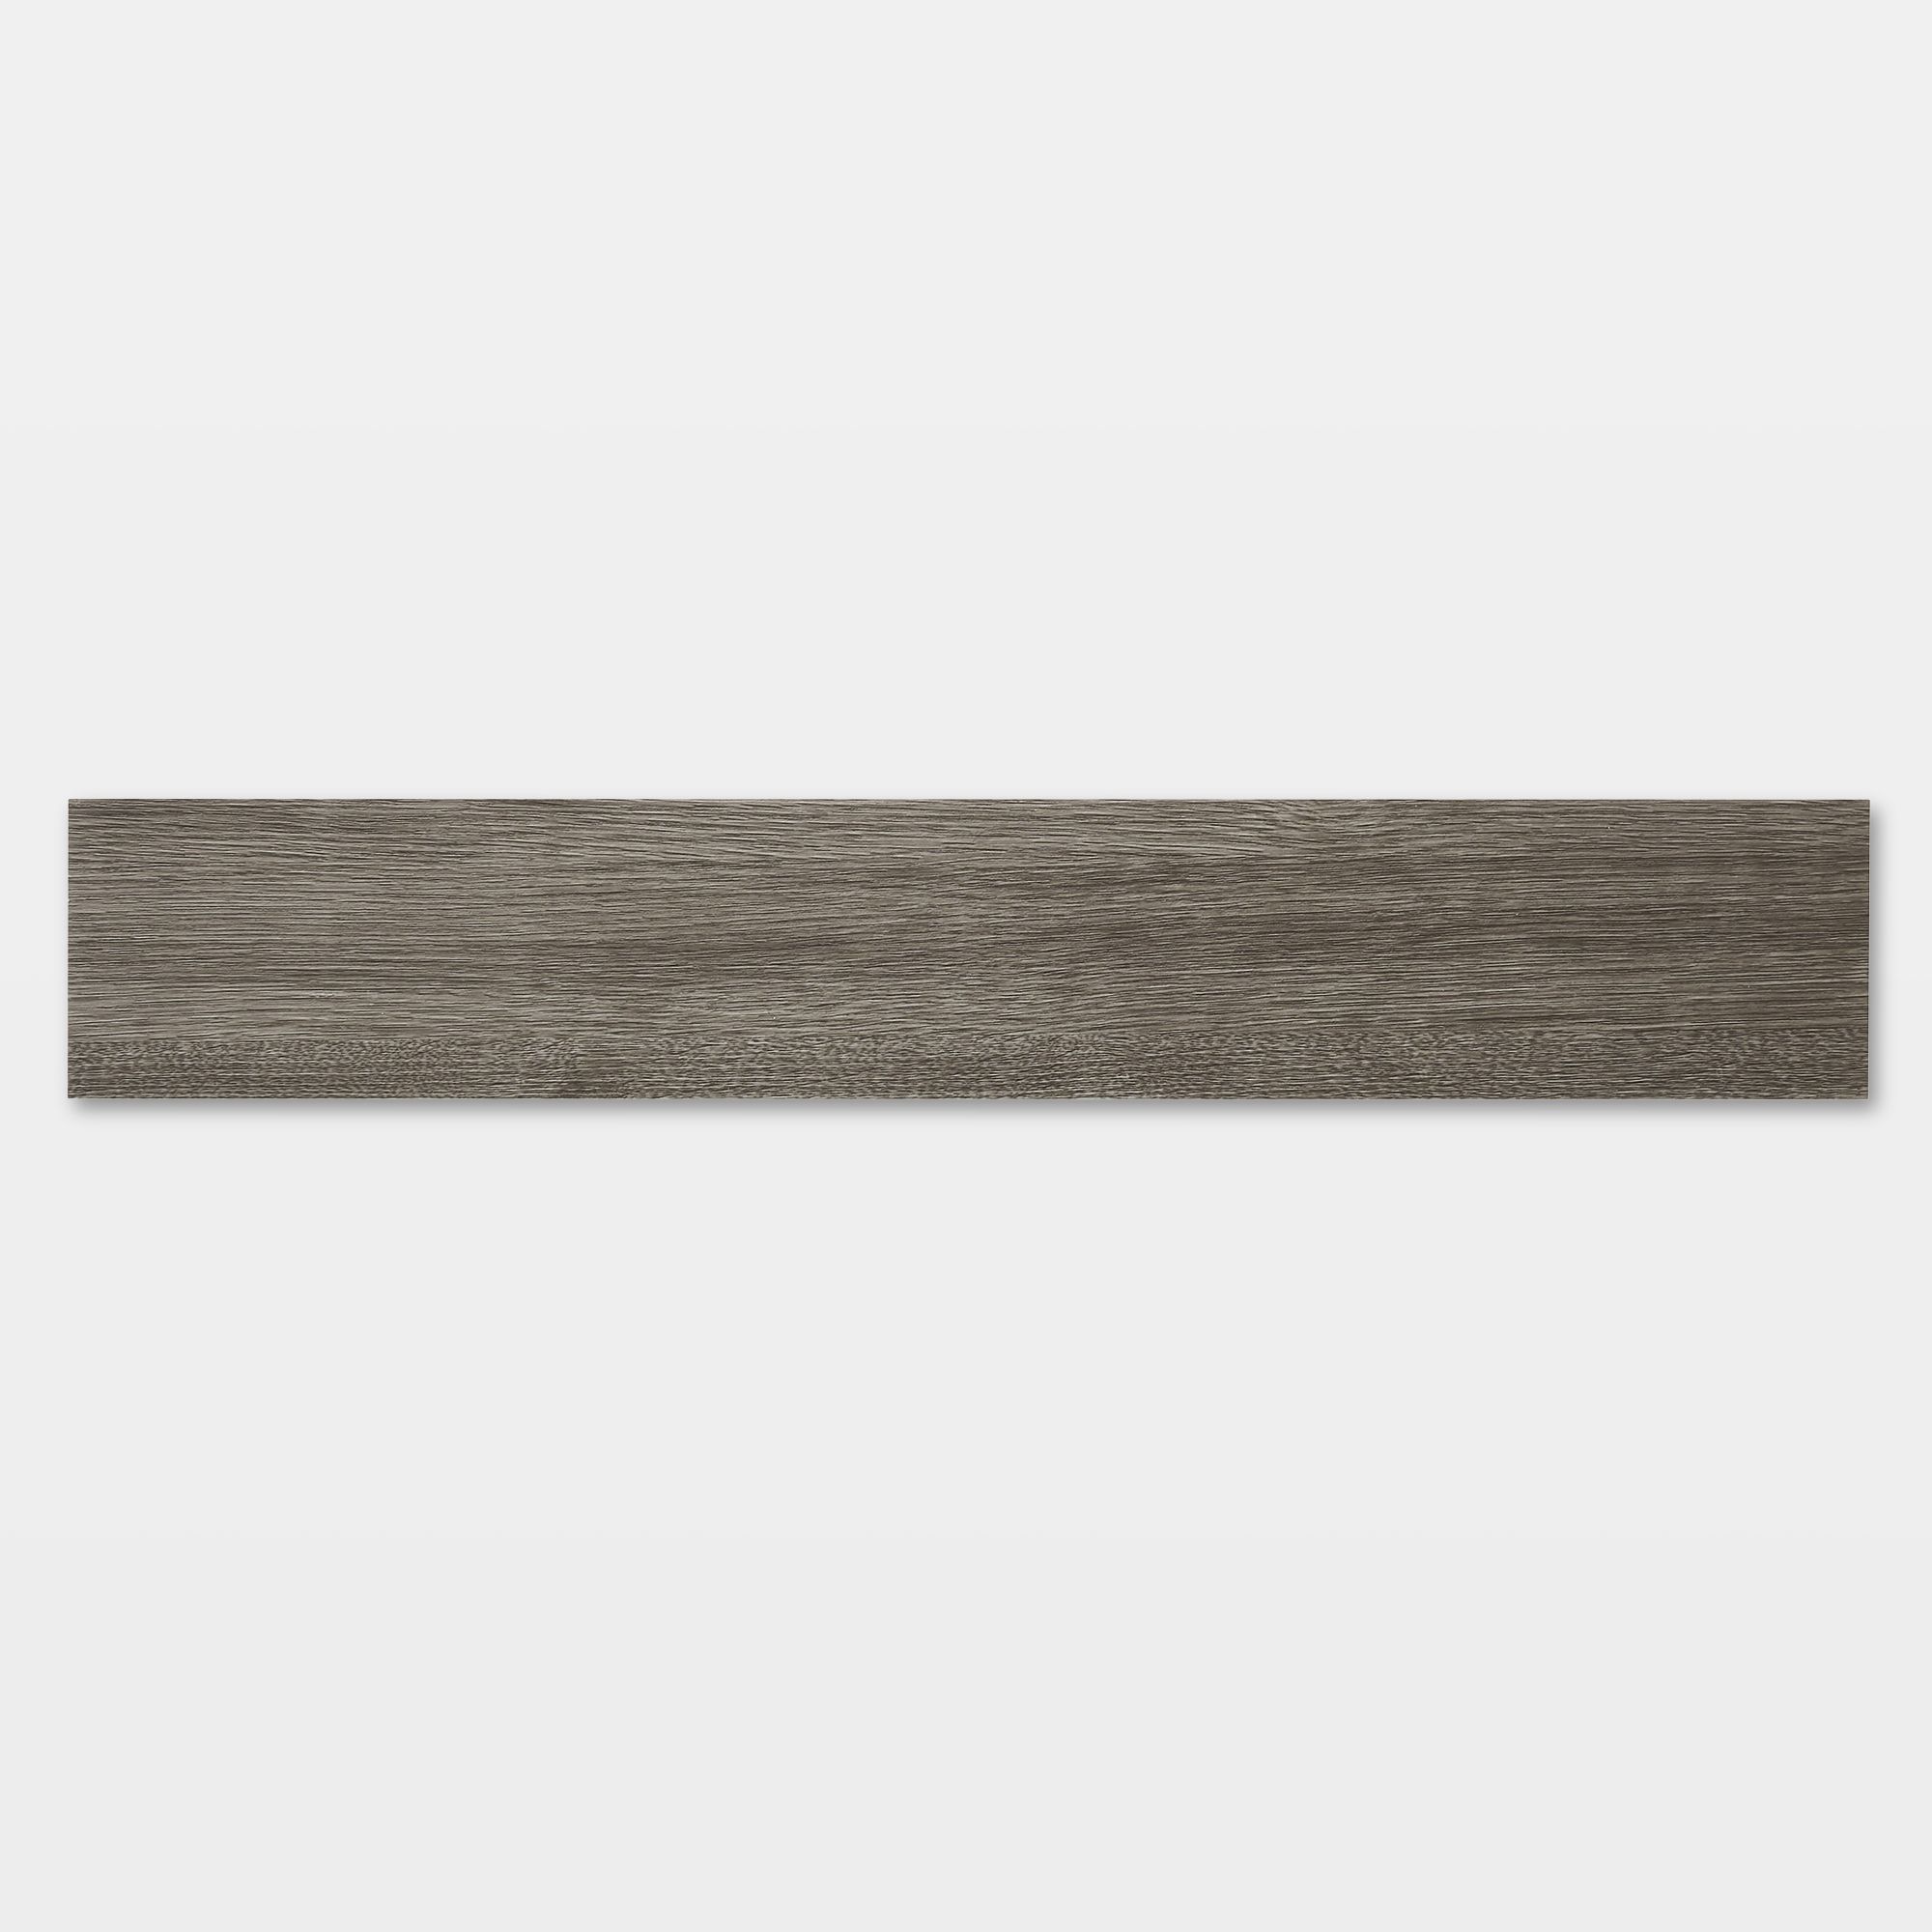 GoodHome Poprock Grey Wood planks Wood effect Self-adhesive Vinyl plank, Pack of 20